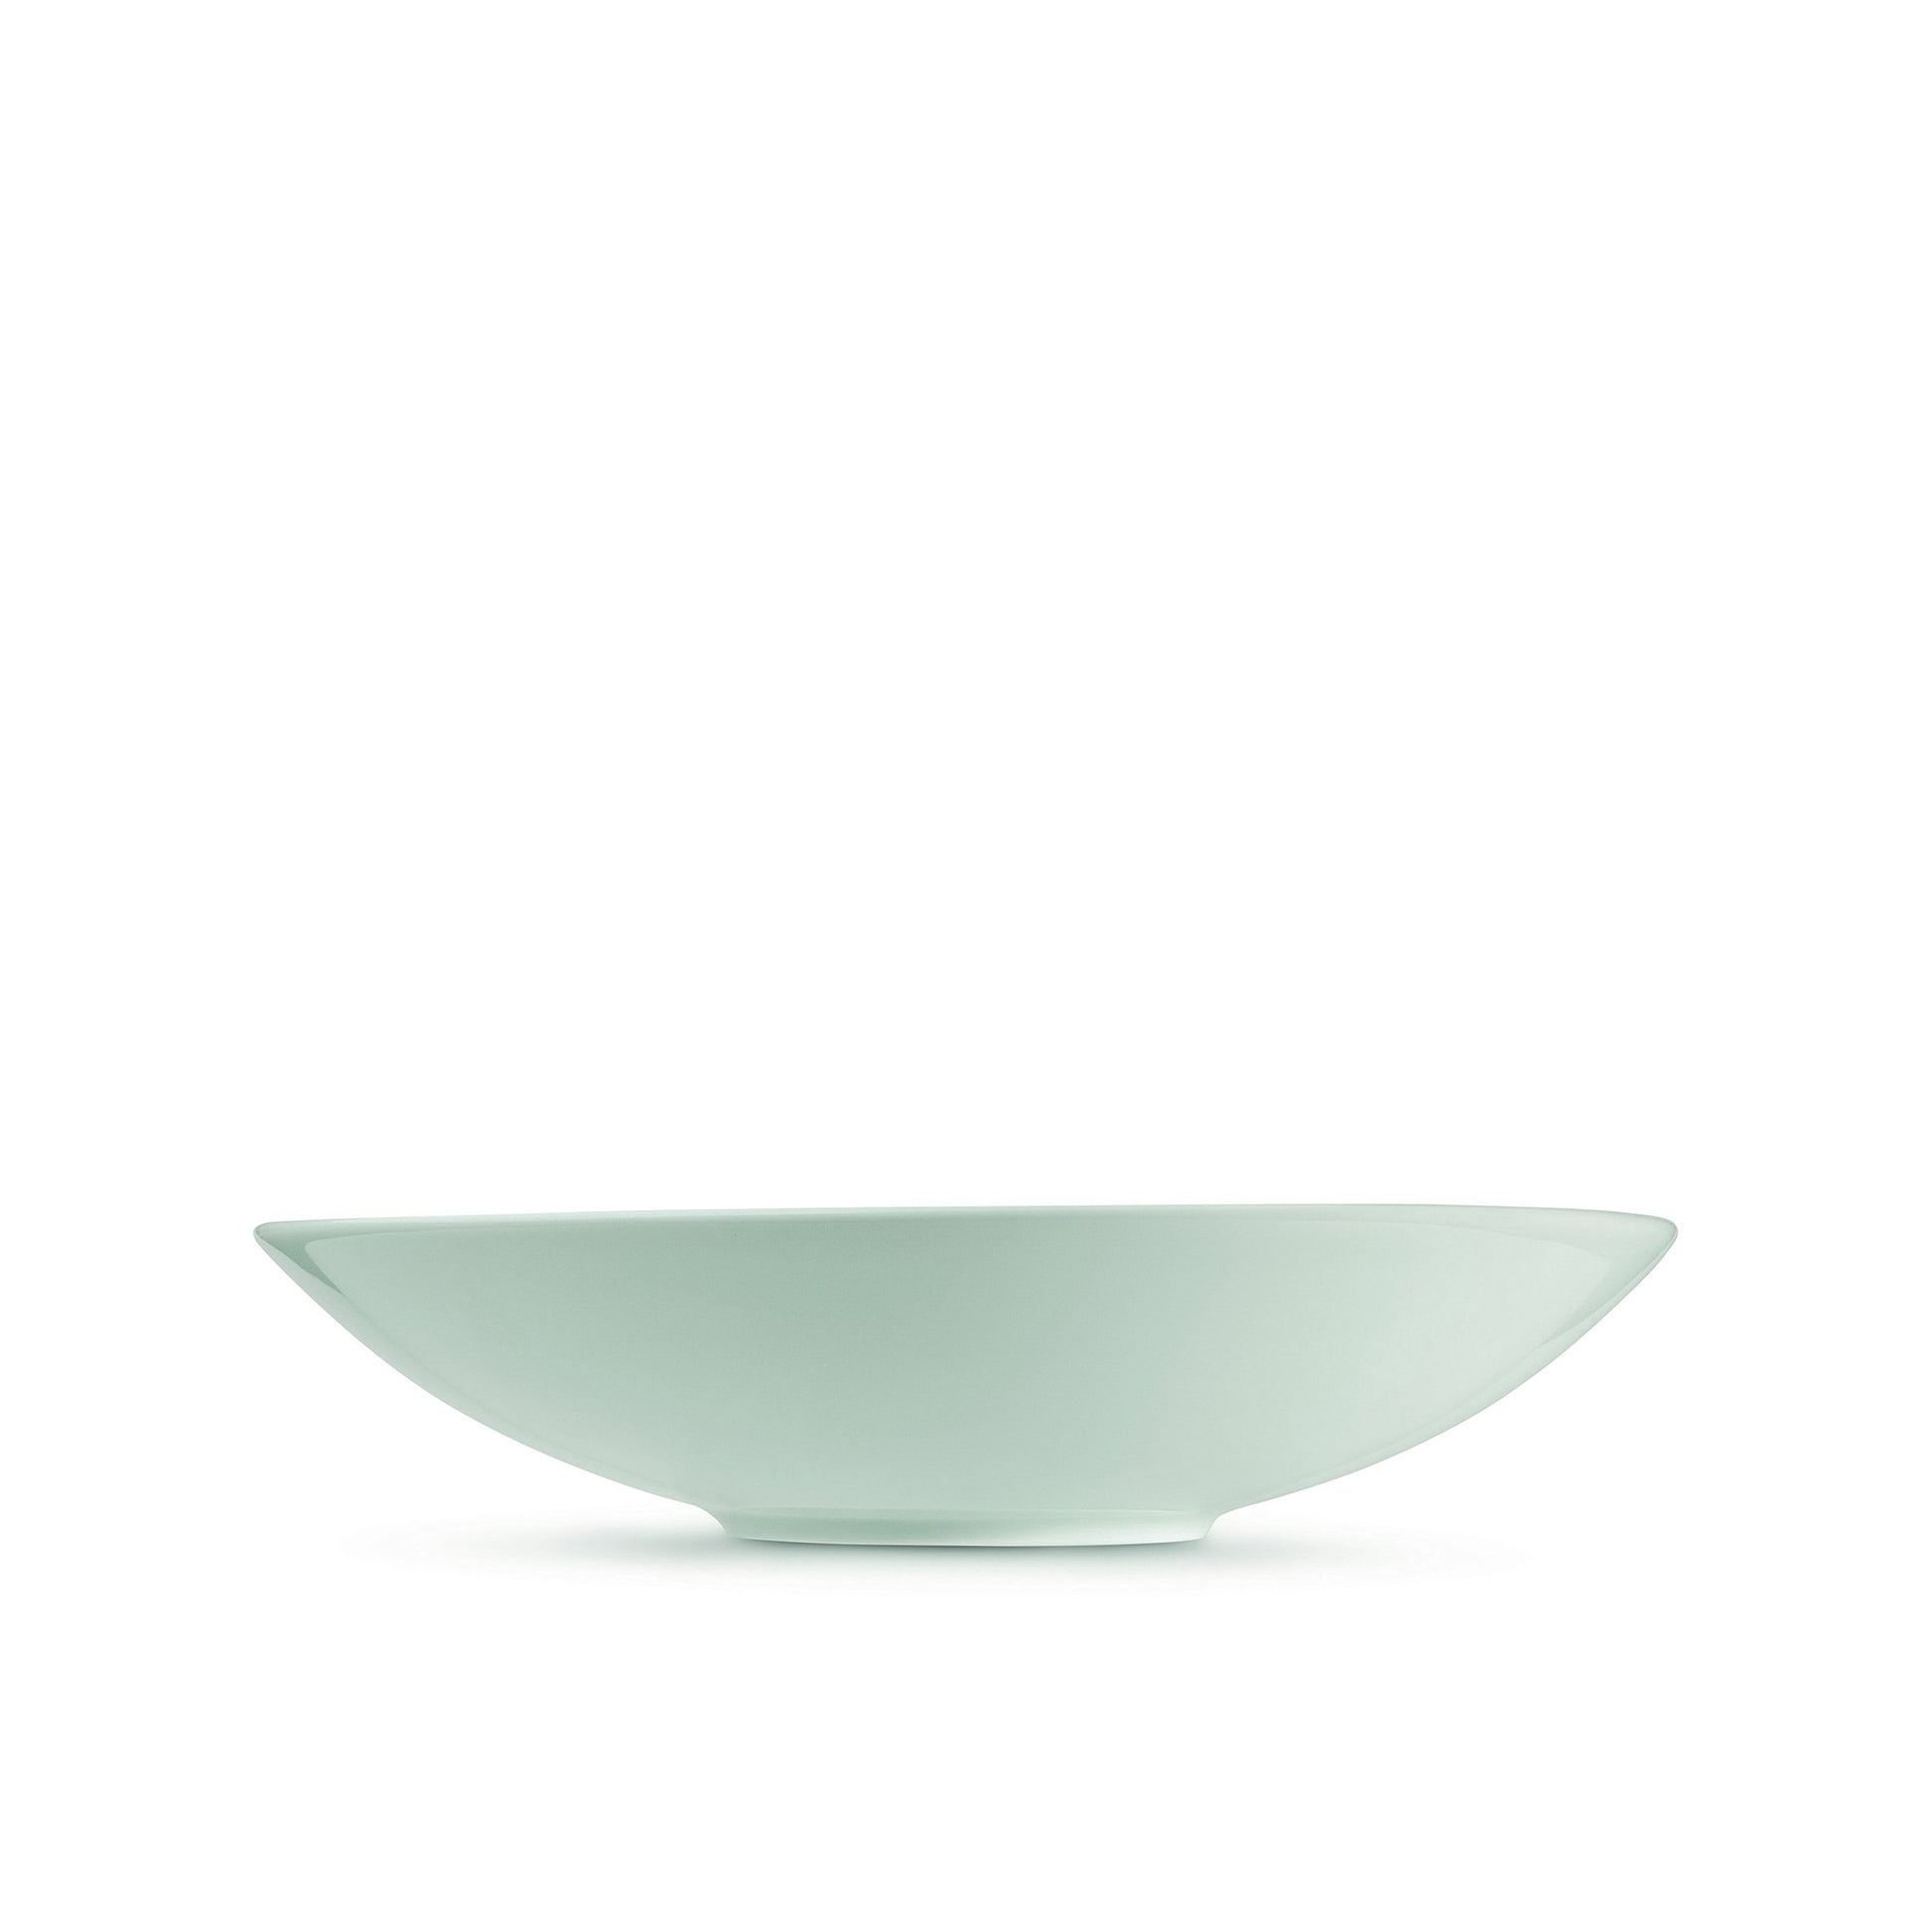 9" green celadon porcelain coupe bowl, salad bowl, soup bowl, horizontal view, media 4 of 4